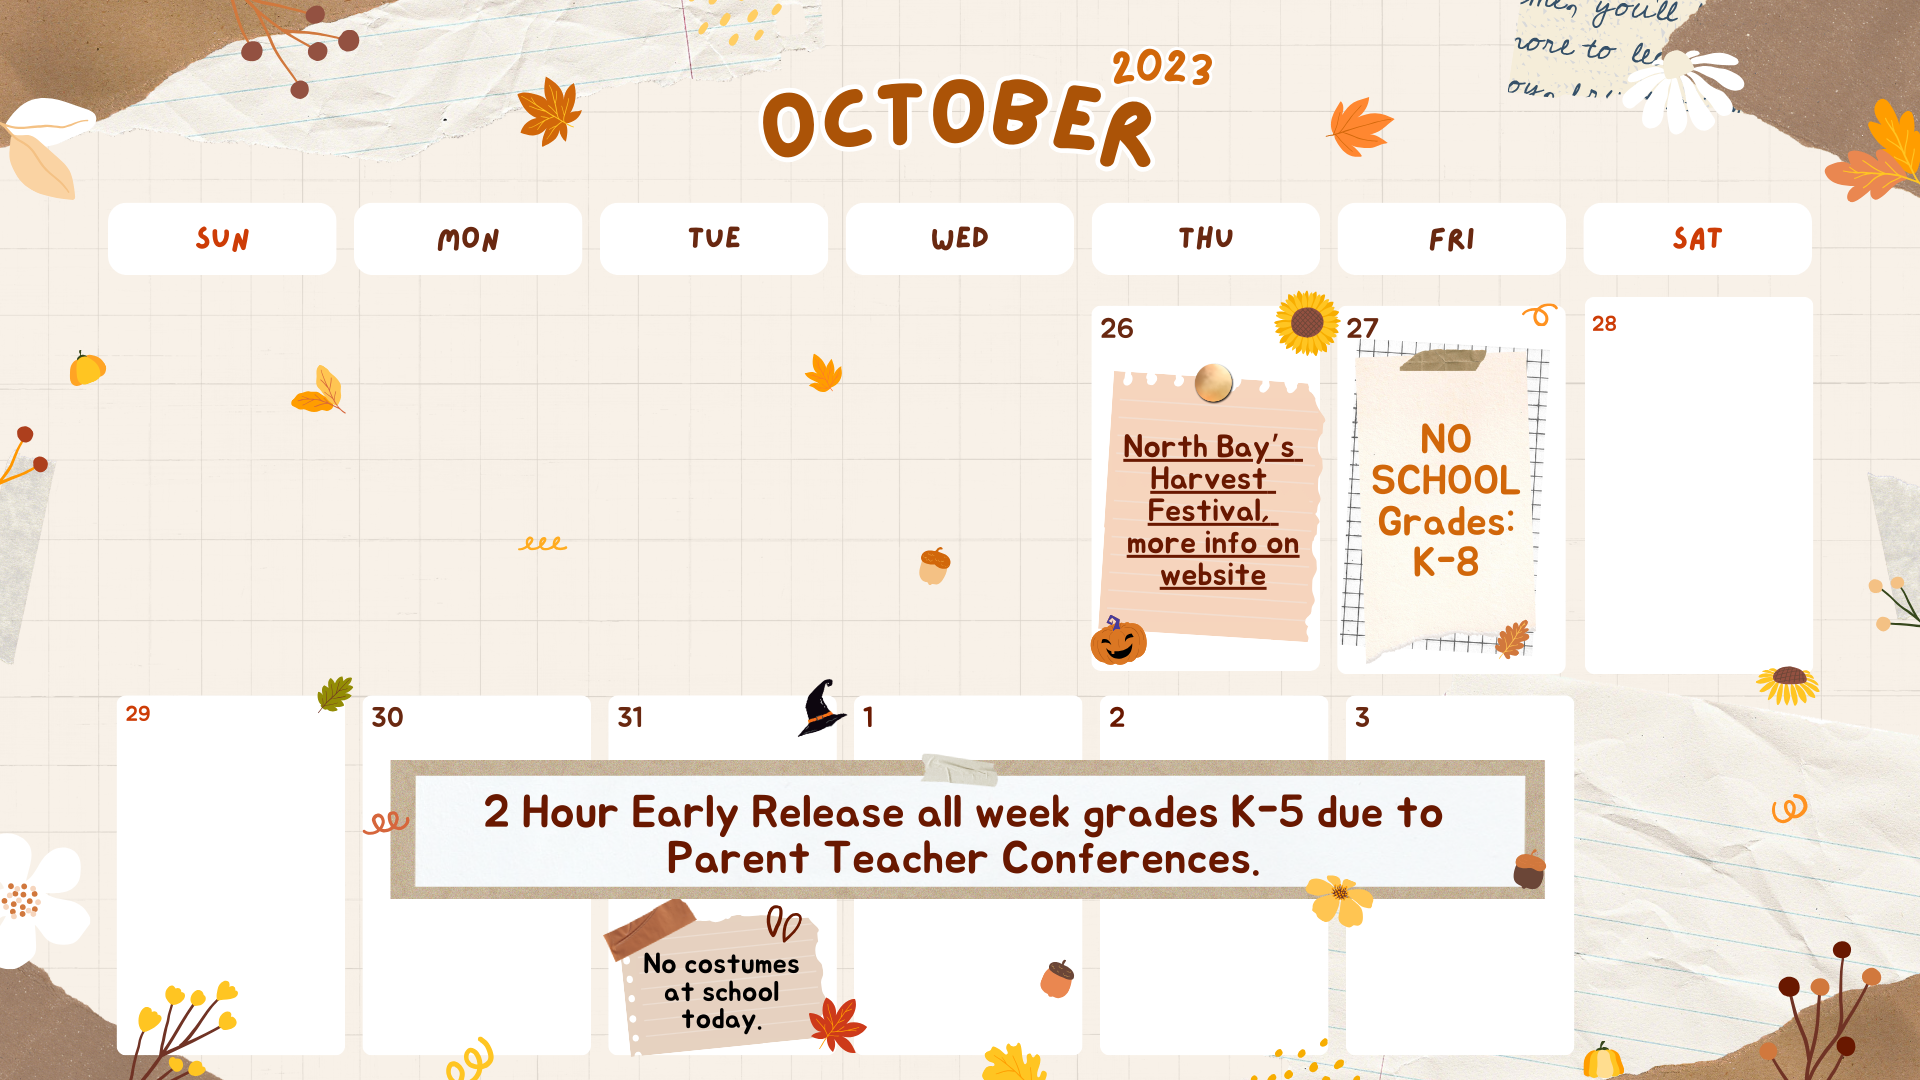 Late October dates at North Bay